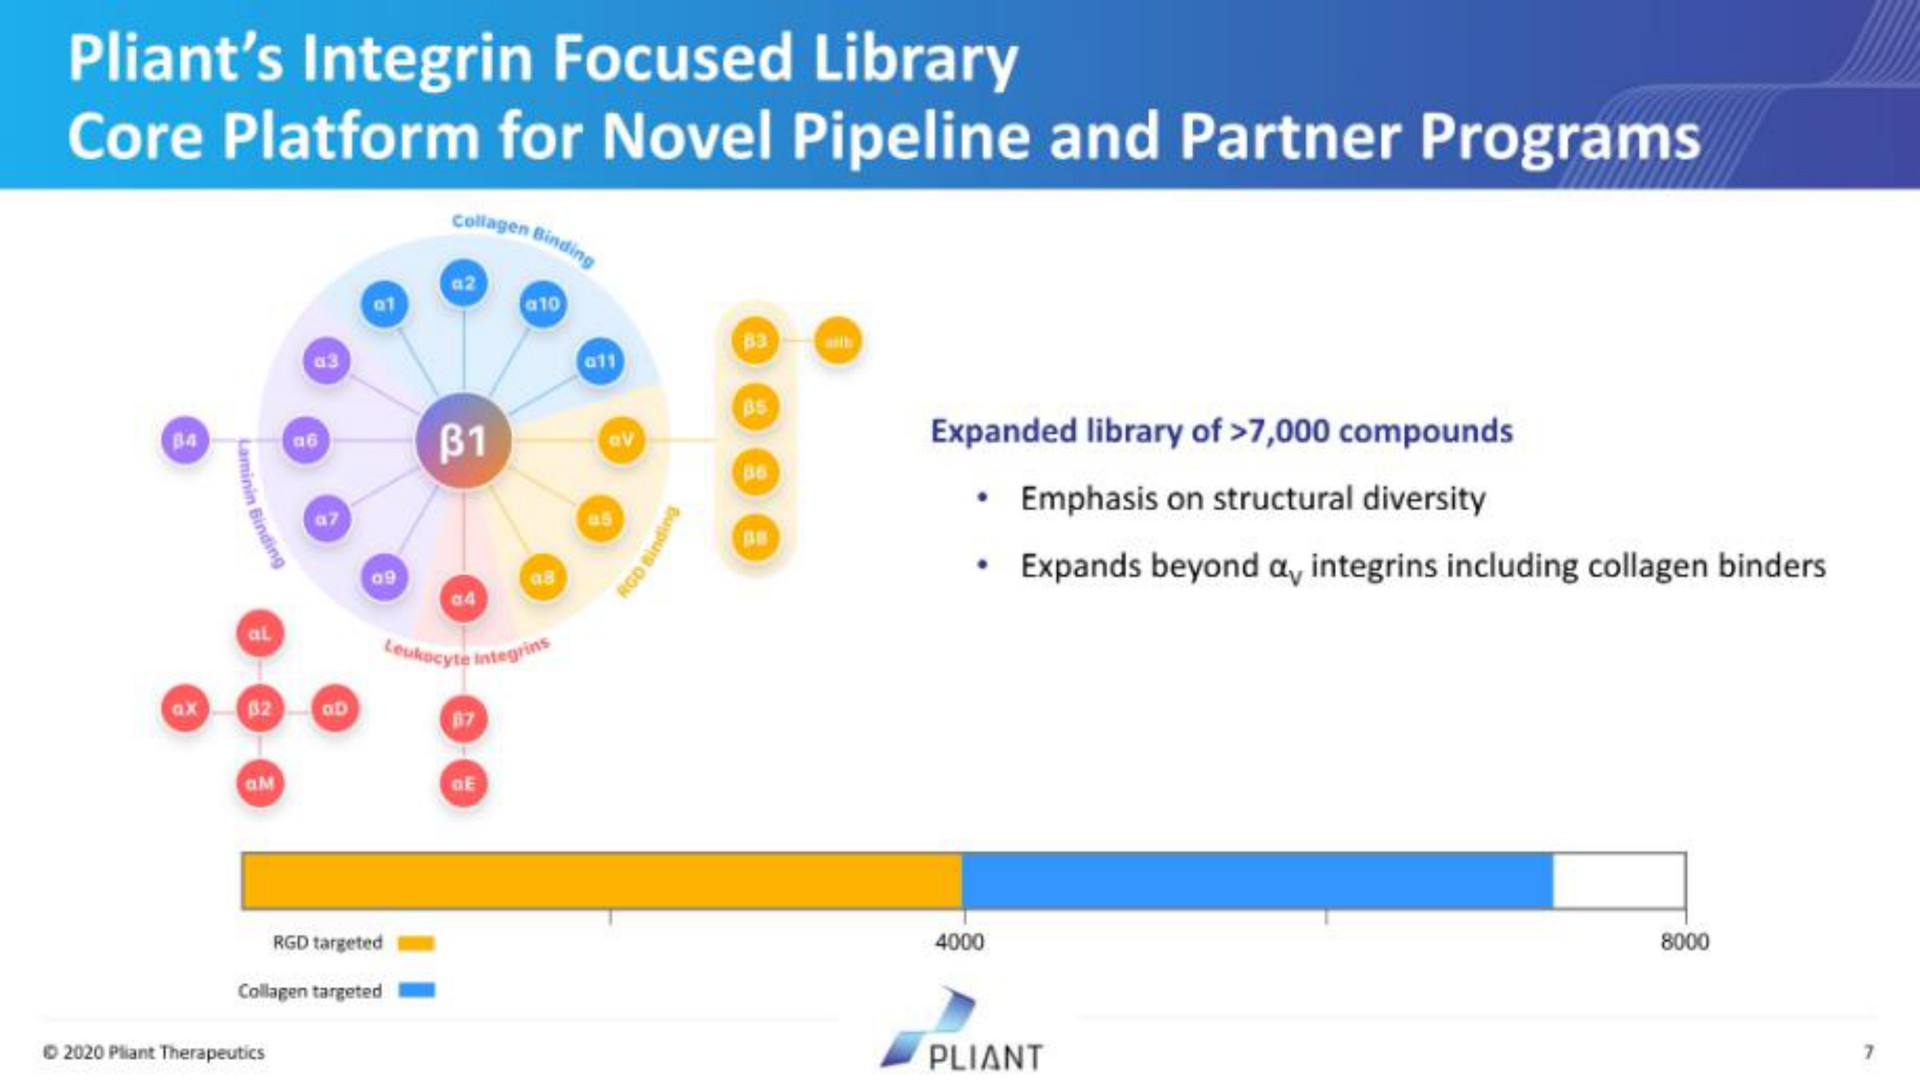 pliant focused library core platform for novel pipeline and partner programs | Pilant Therapeutics